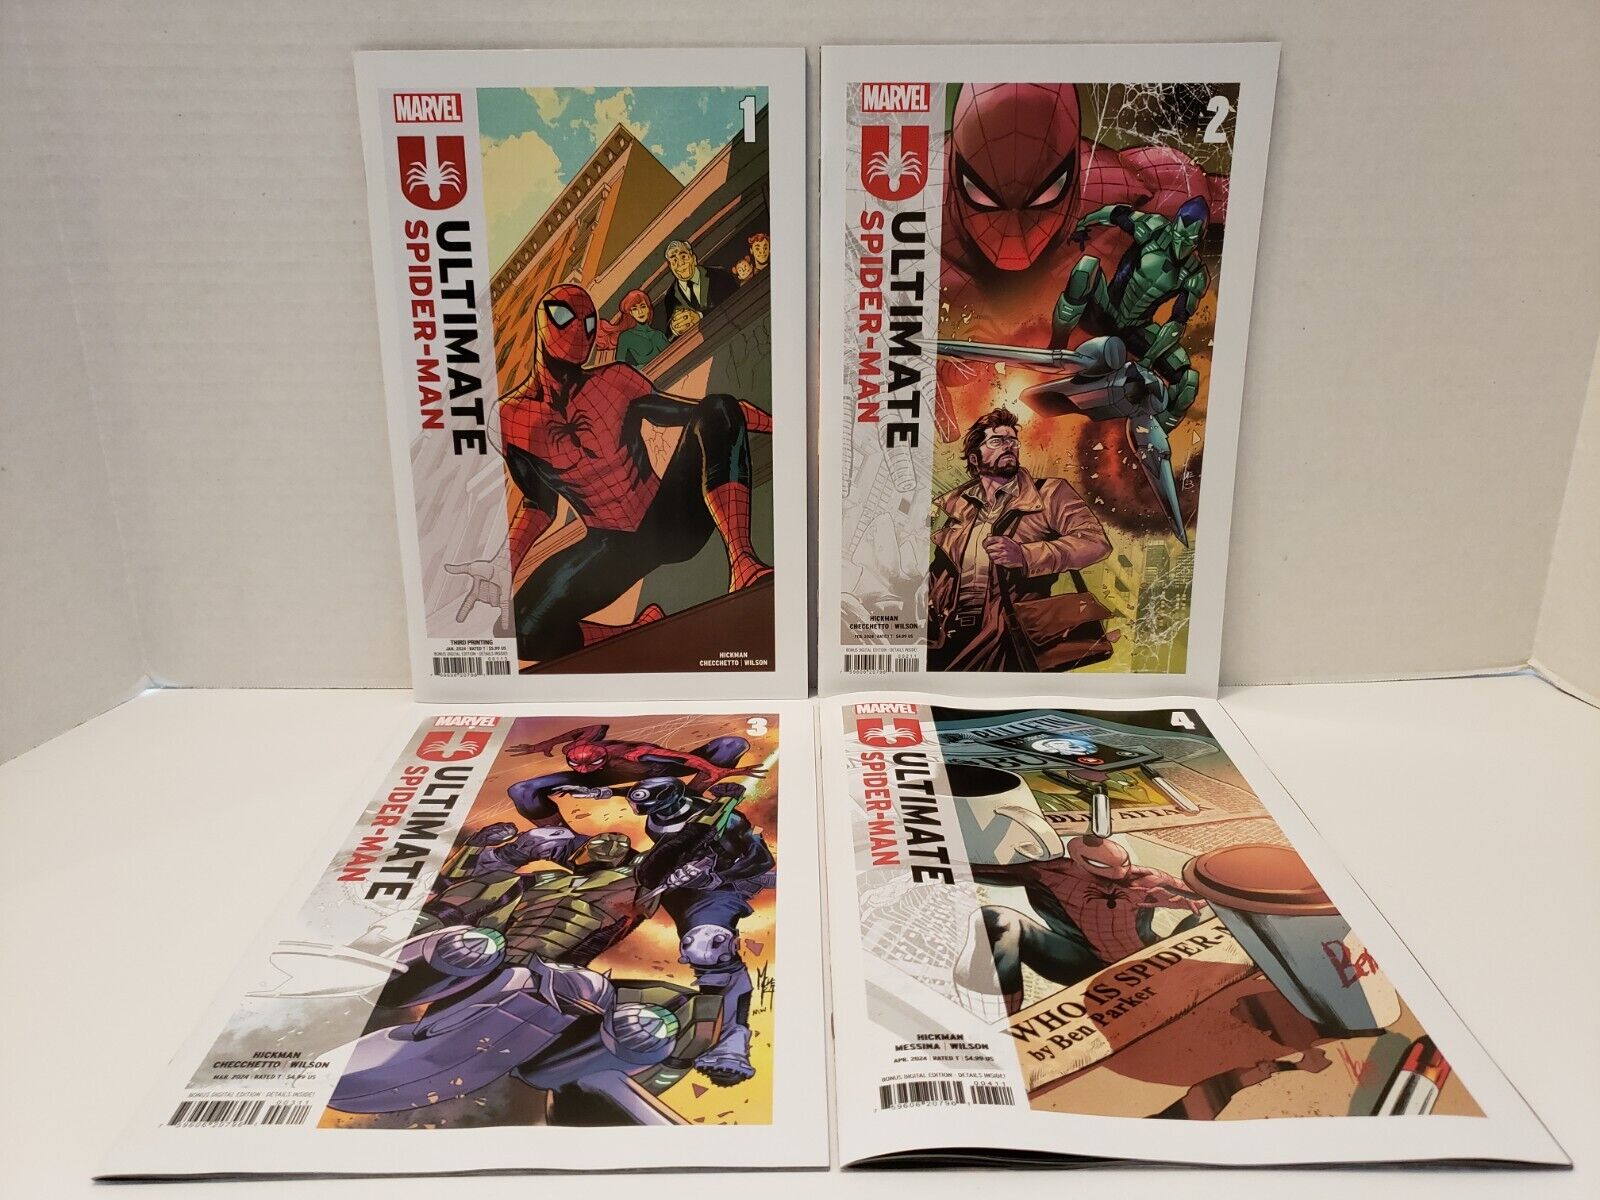 Ultimate Spider-Man #1 (3rd Print) + #2, #3 & #4 (1st Prints) - NM or 9.4